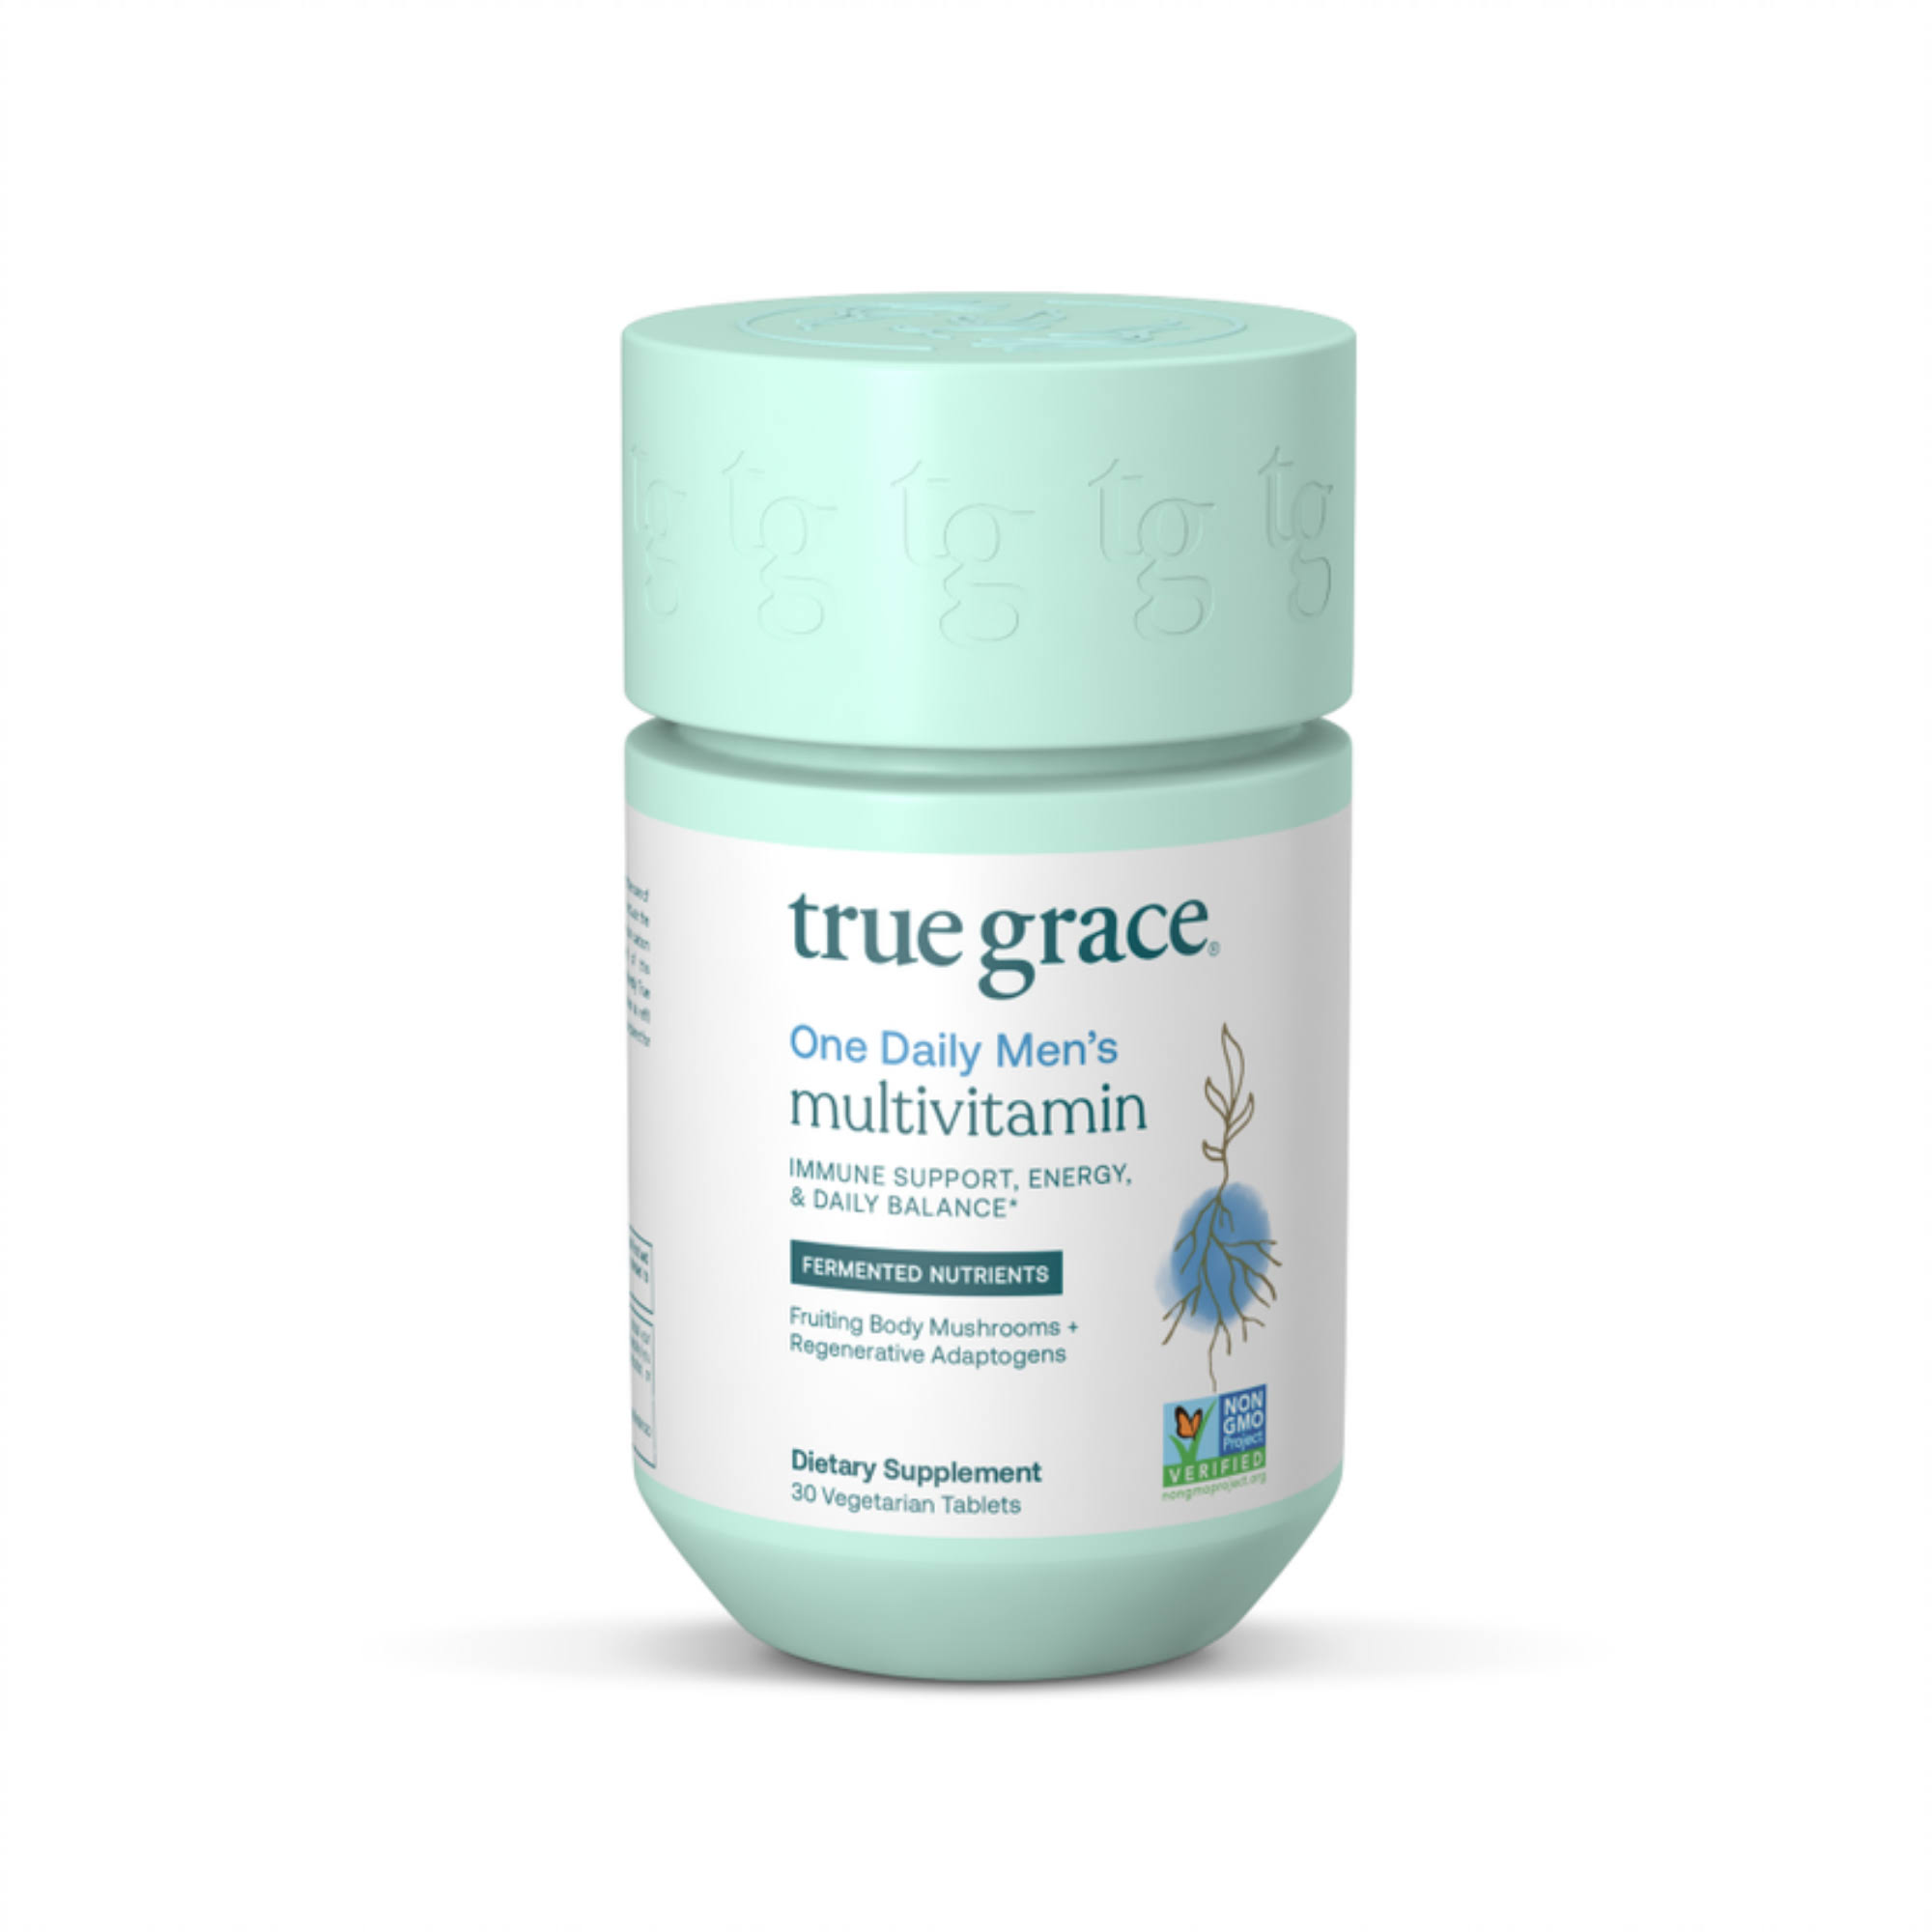 True Grace - One Daily Men's Multivitamin - 30 Vegetarian Tablets